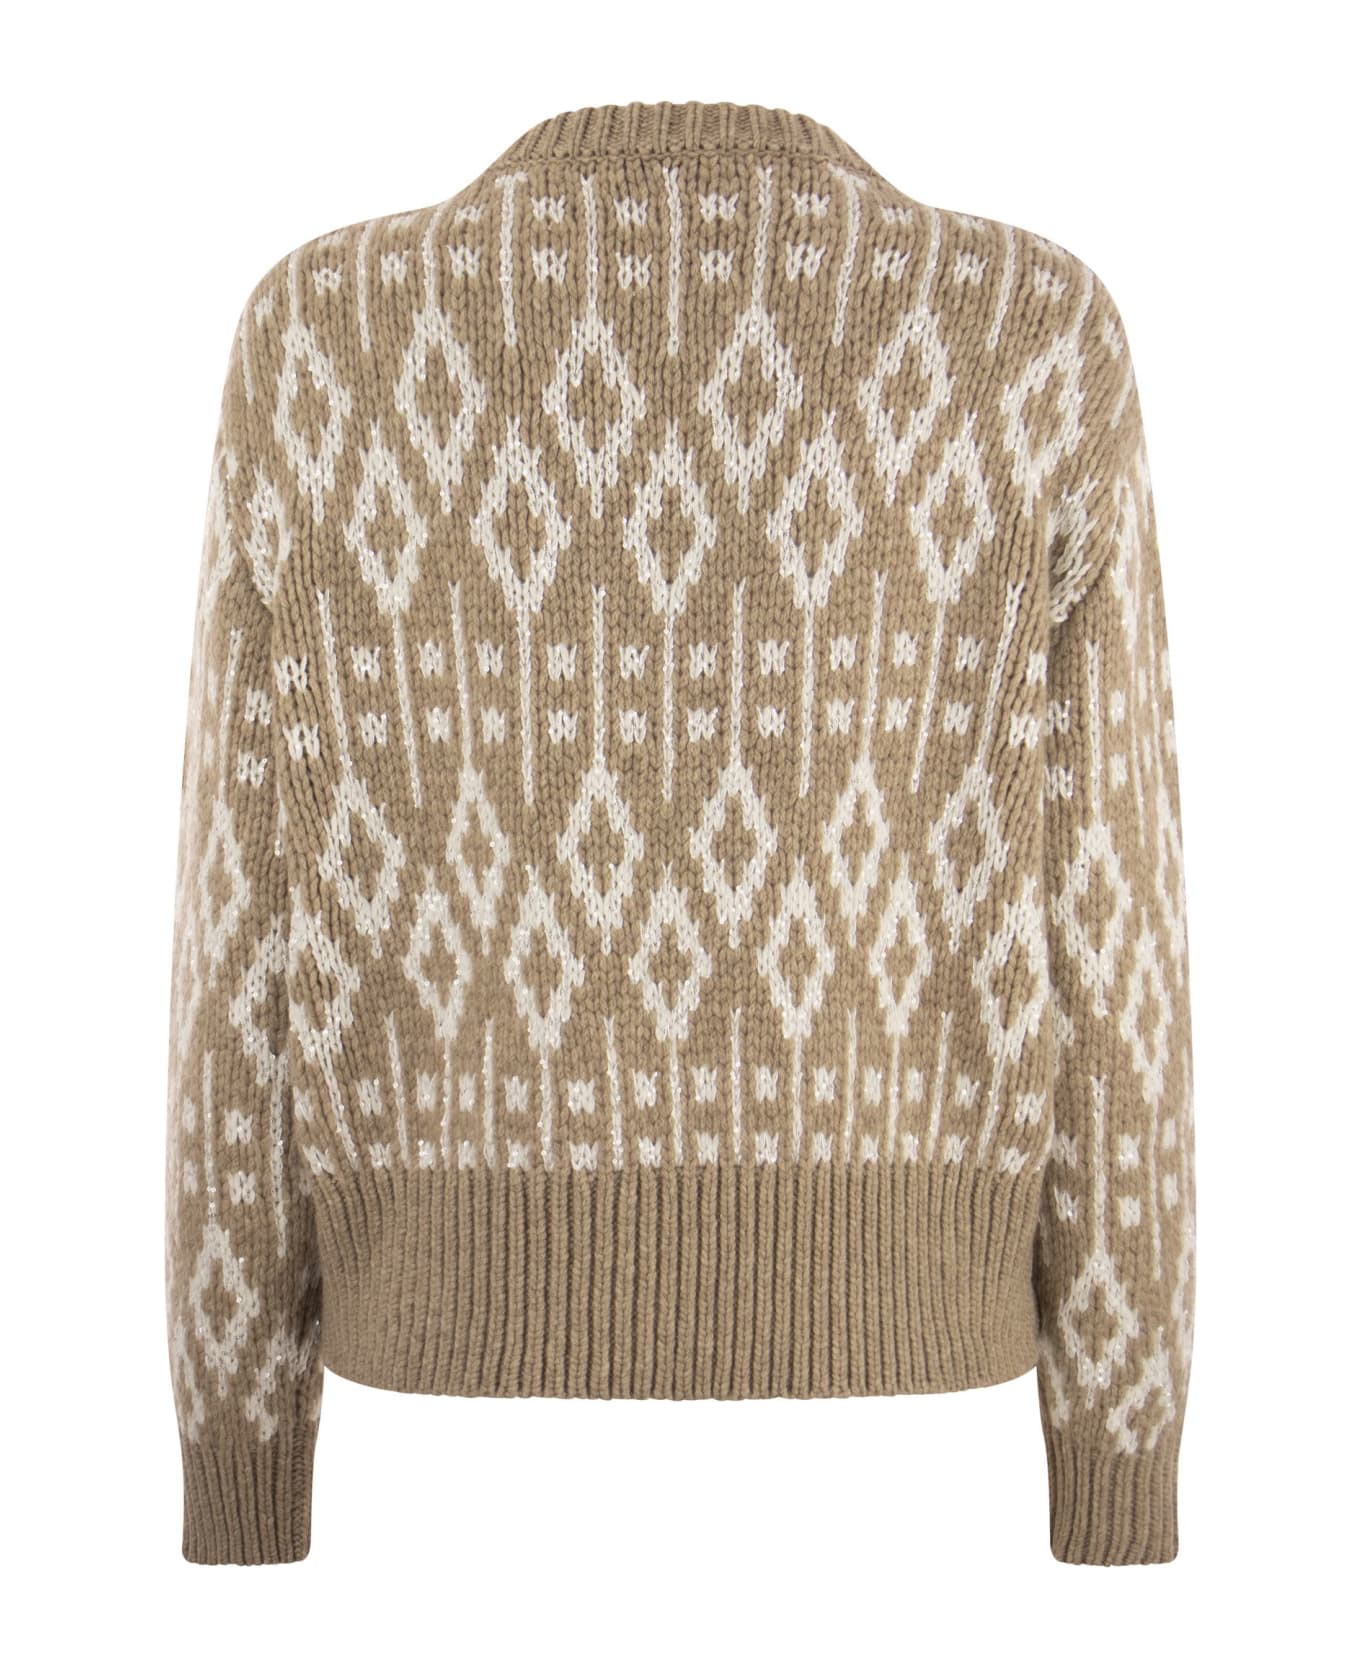 Brunello Cucinelli Vintage Jacquard Cashmere Sweater - Beige